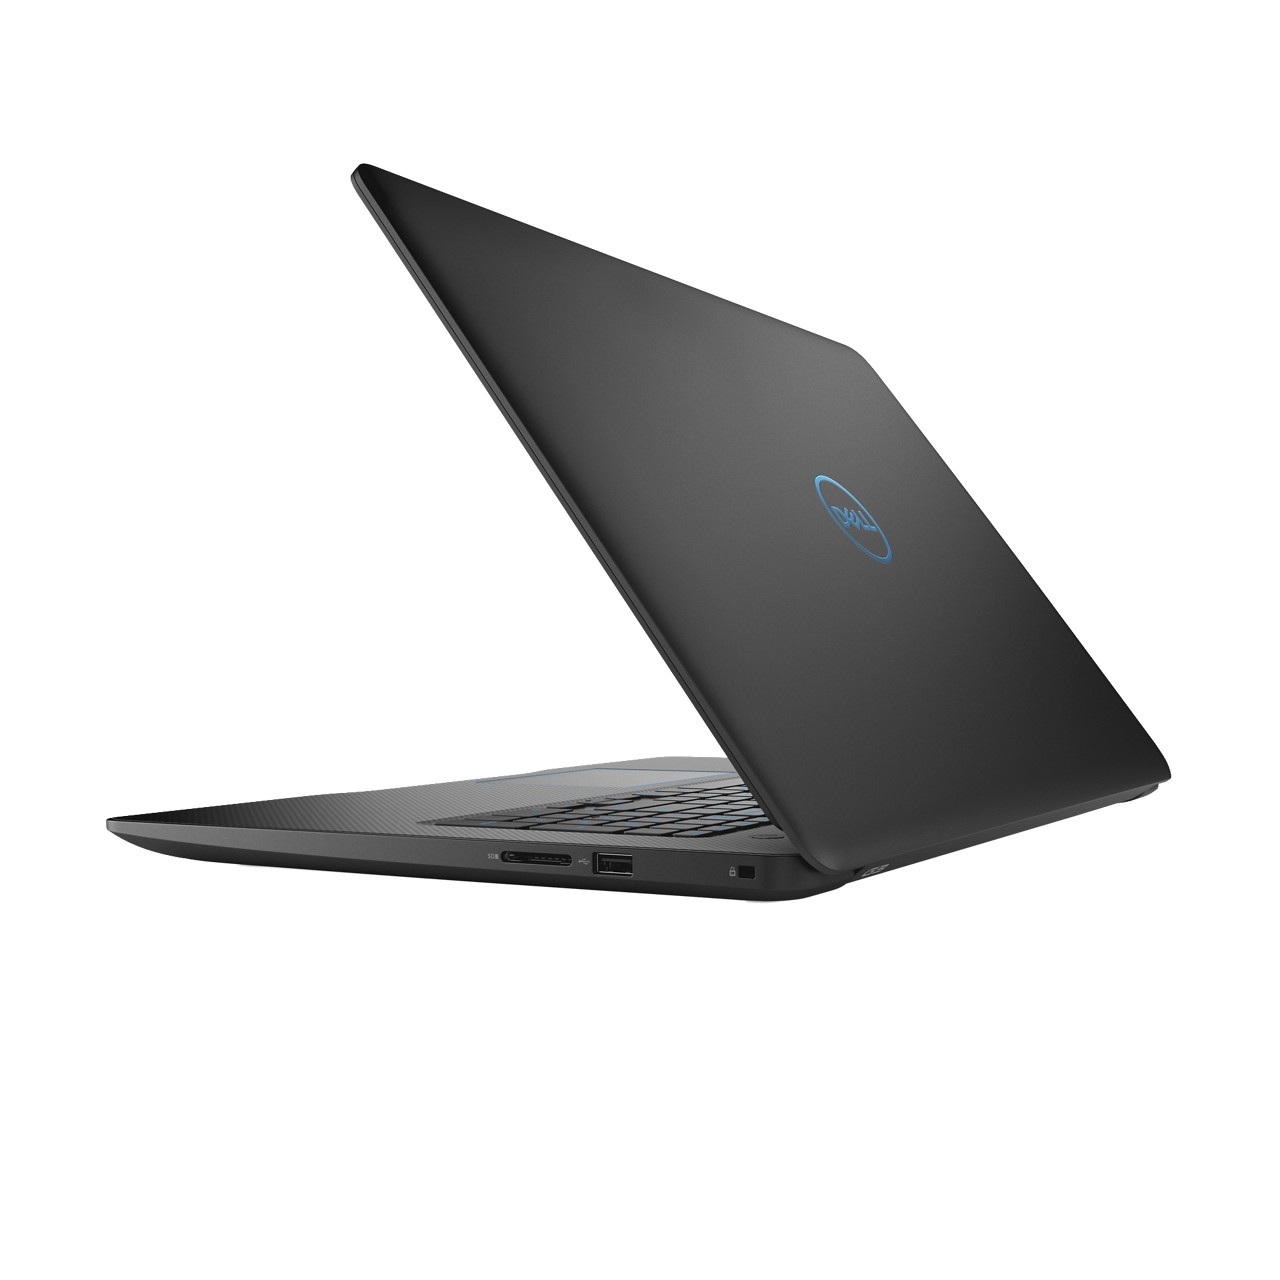 Dell G3 Gaming Laptop 17.3" Intel Core i7-8750H, NVIDIA GeForce GTX 1050Ti, 16GB RAM, 128GB SSD + 1TB HDD WIN 10, G3779-7927BLK-PUS - image 5 of 8